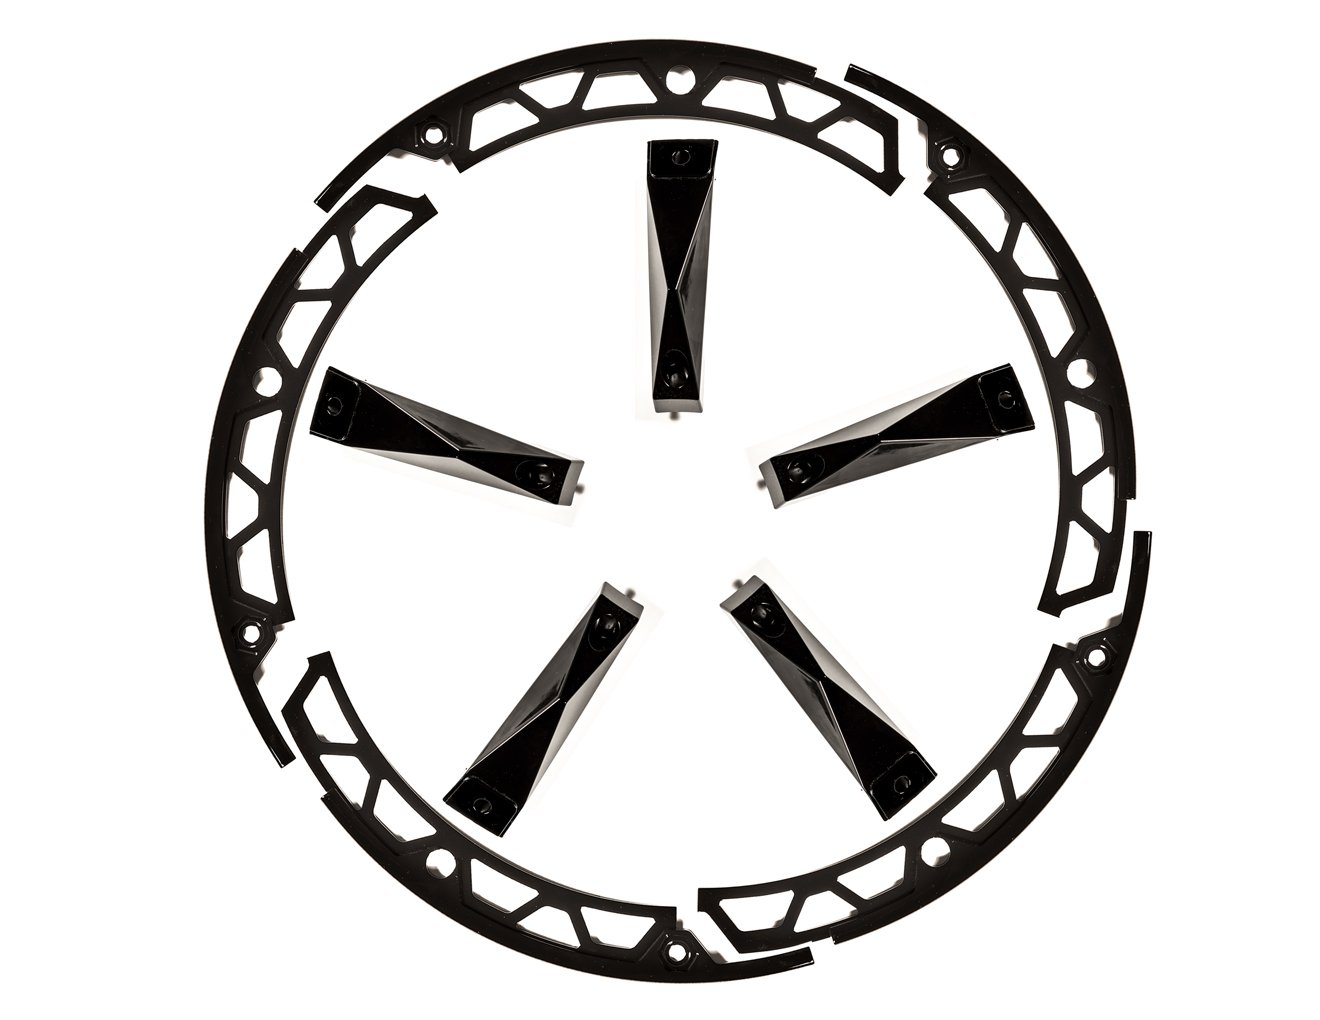 GD04A-Series Wheel Insert, Fits Wheel Size: 20 x